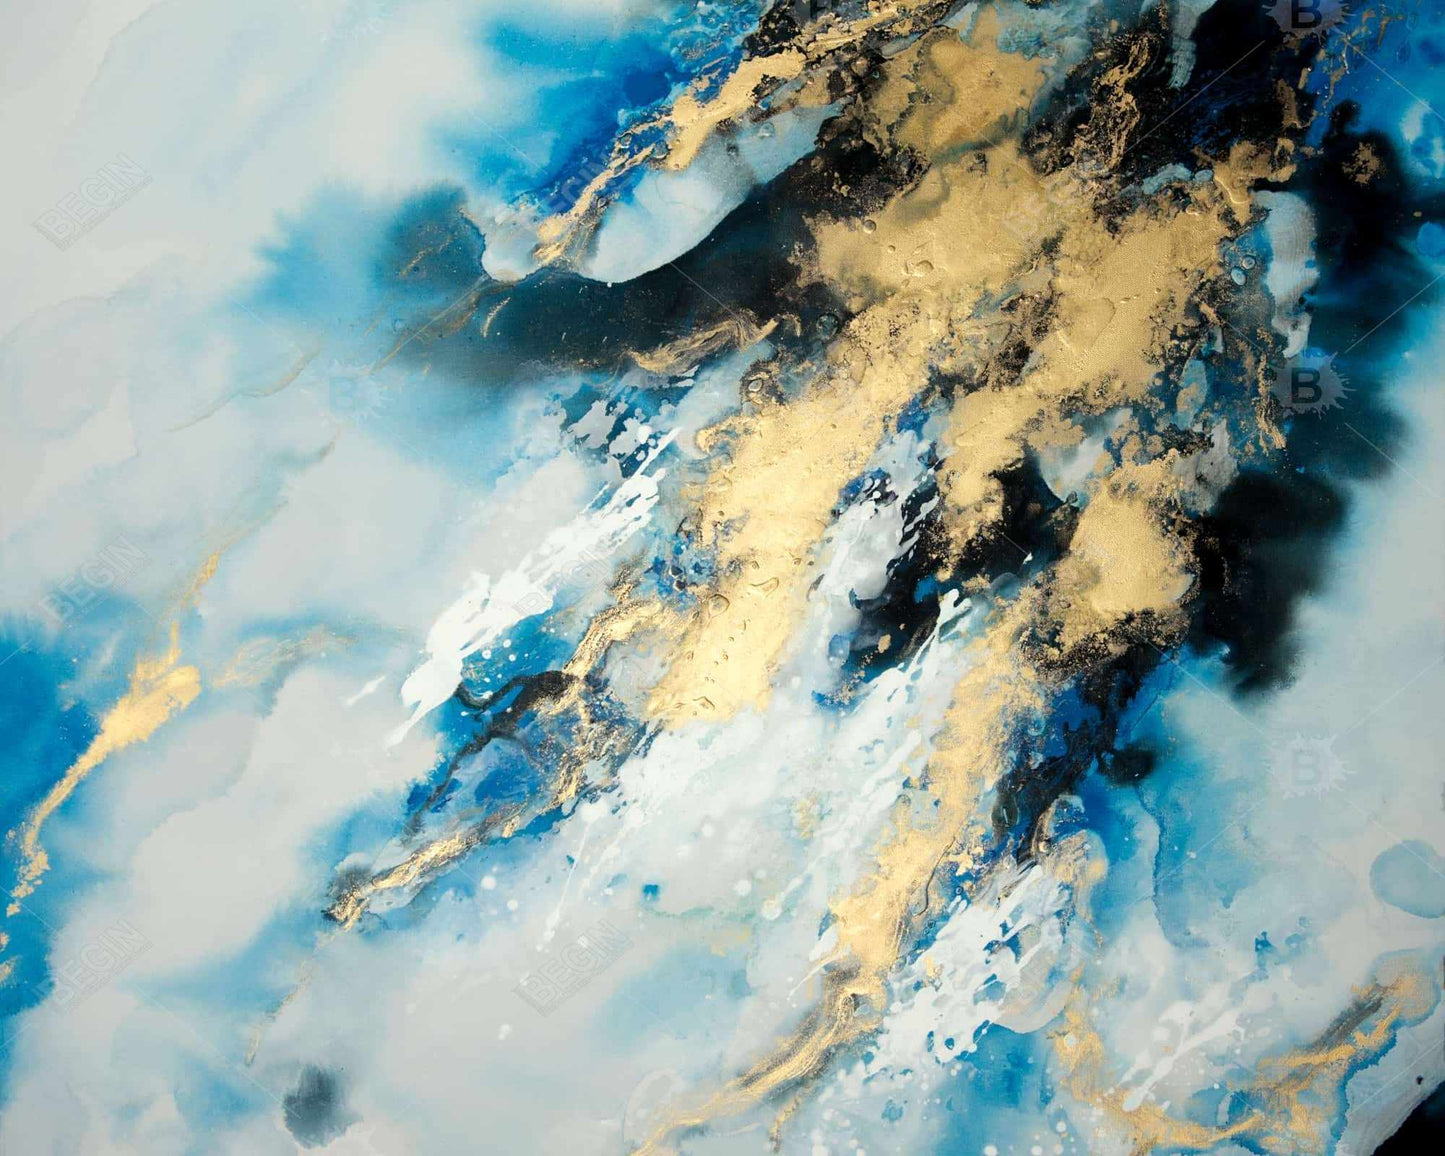 Blue marble - 08x10 Print on canvas